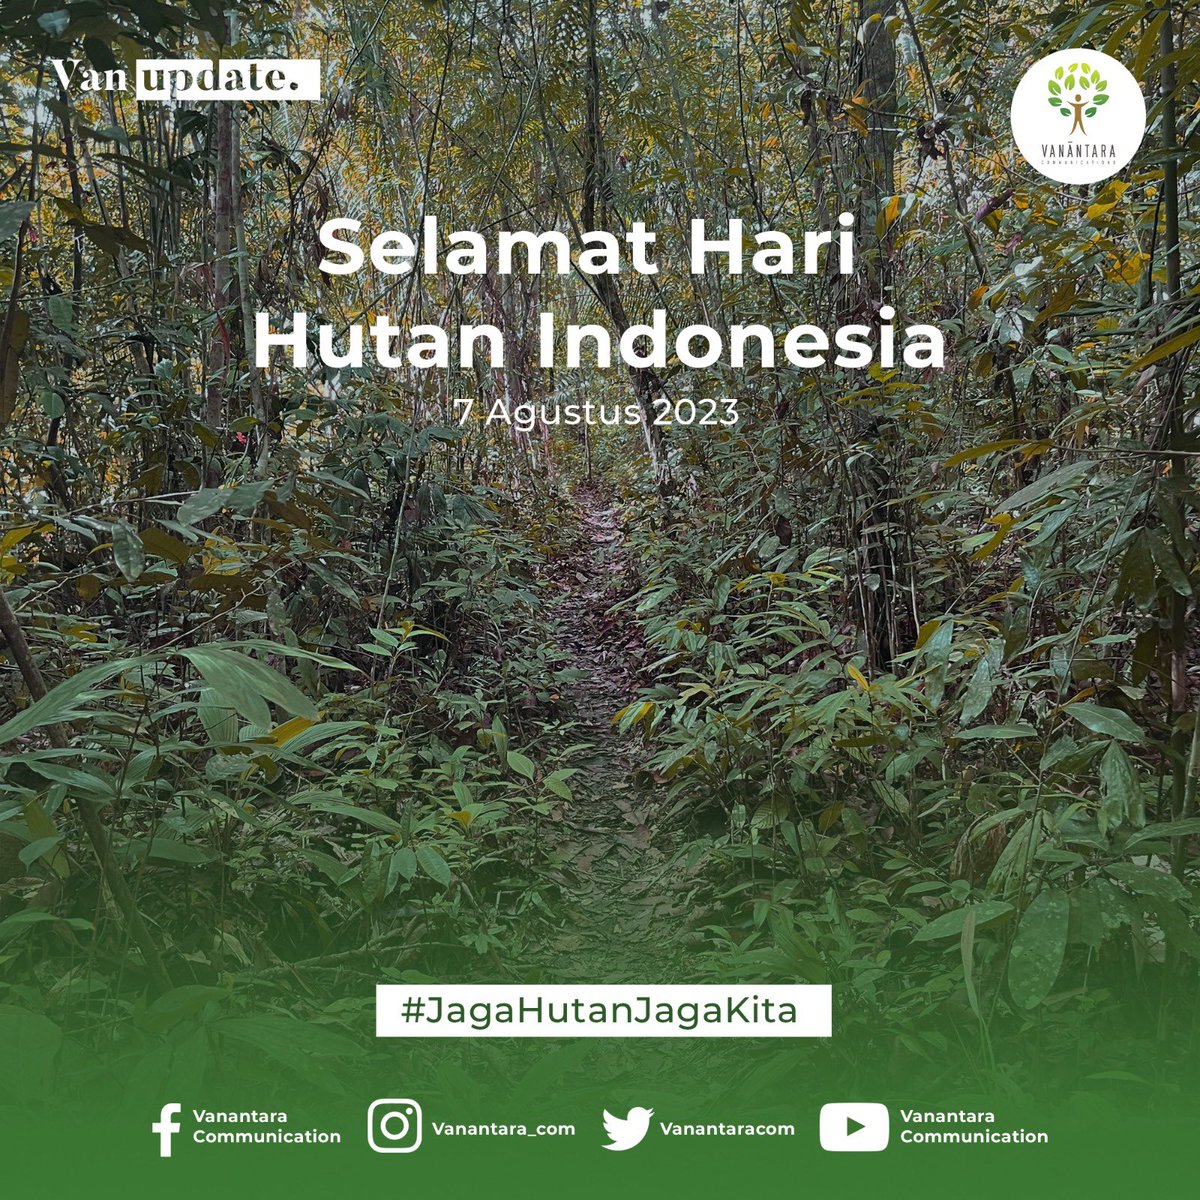 Selamat Hari Hutan Indonesia, Kawan Lungkungan!💚